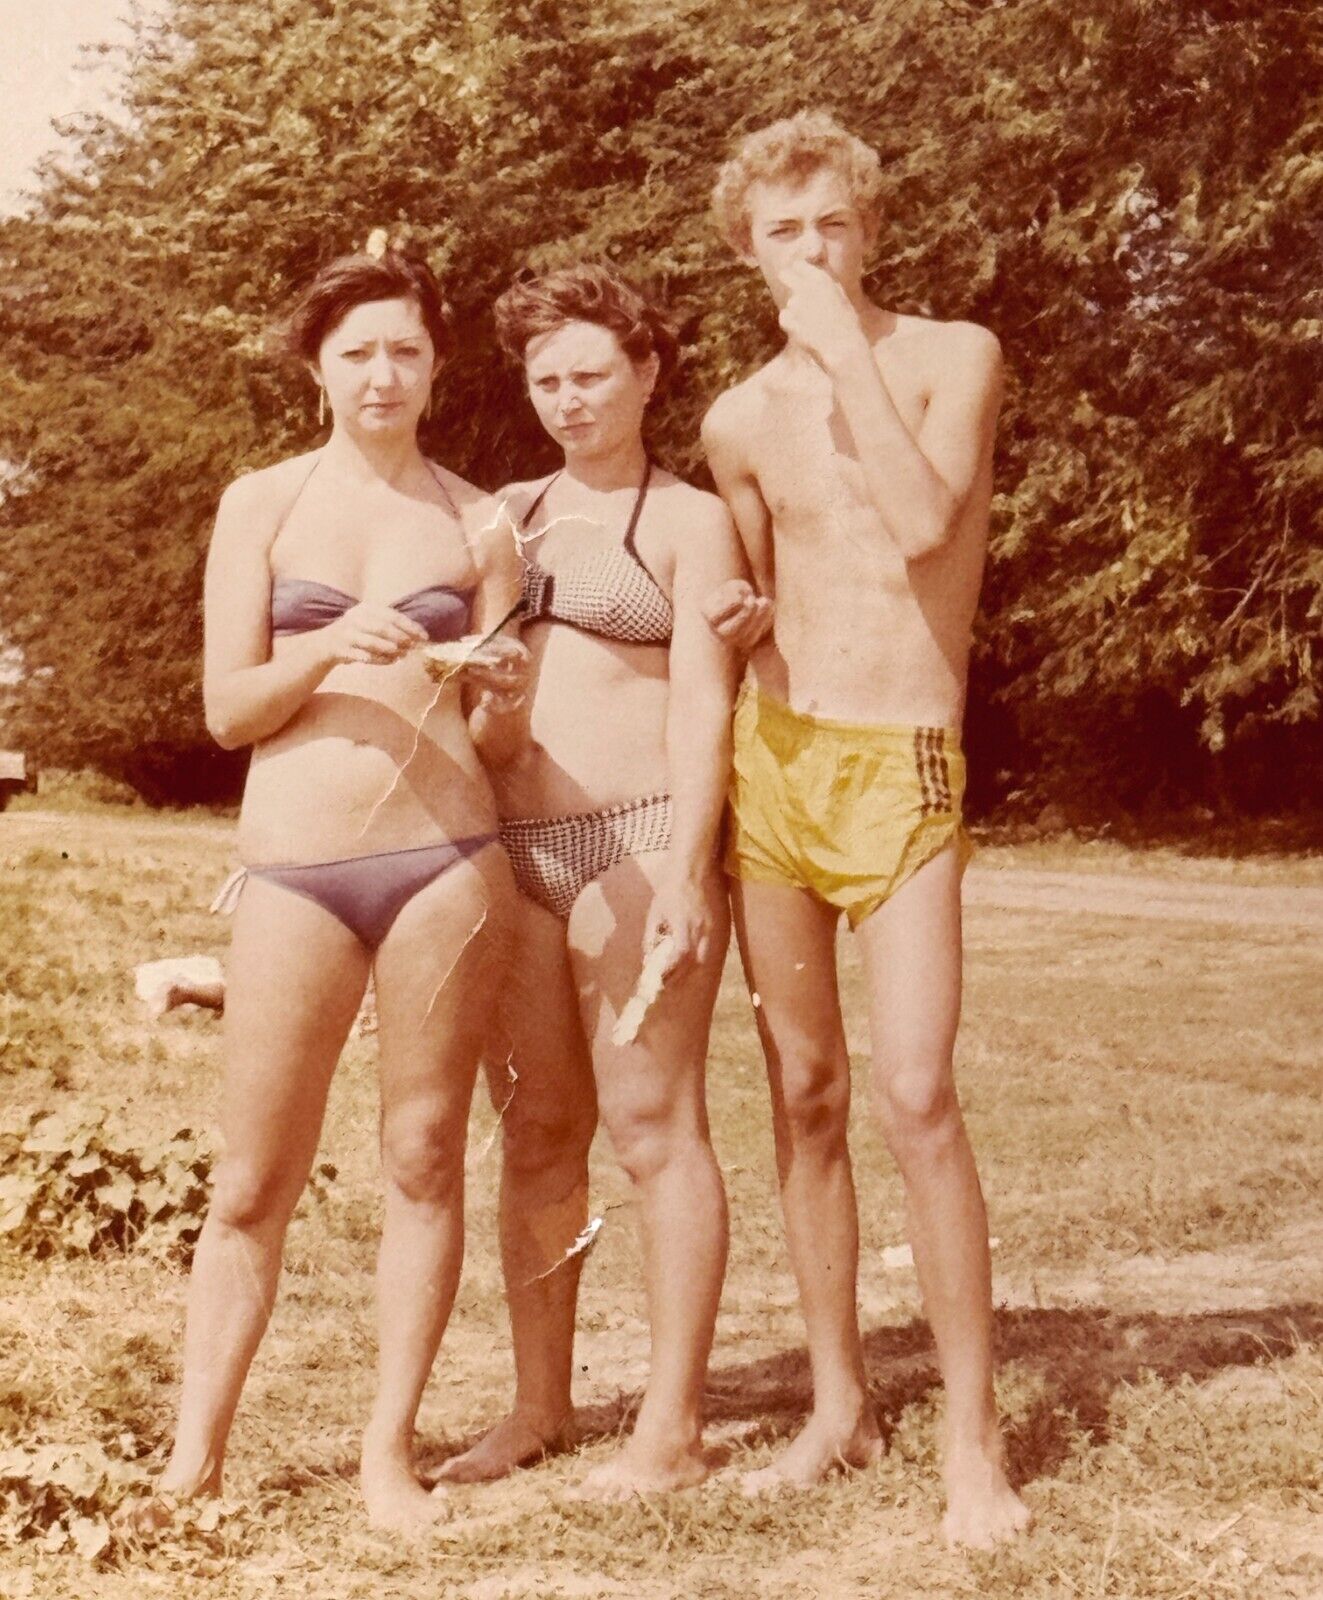 1980s Handsome Slim Shirtless Man Bulge Trunks Two Women Gay Int Vintage Photo